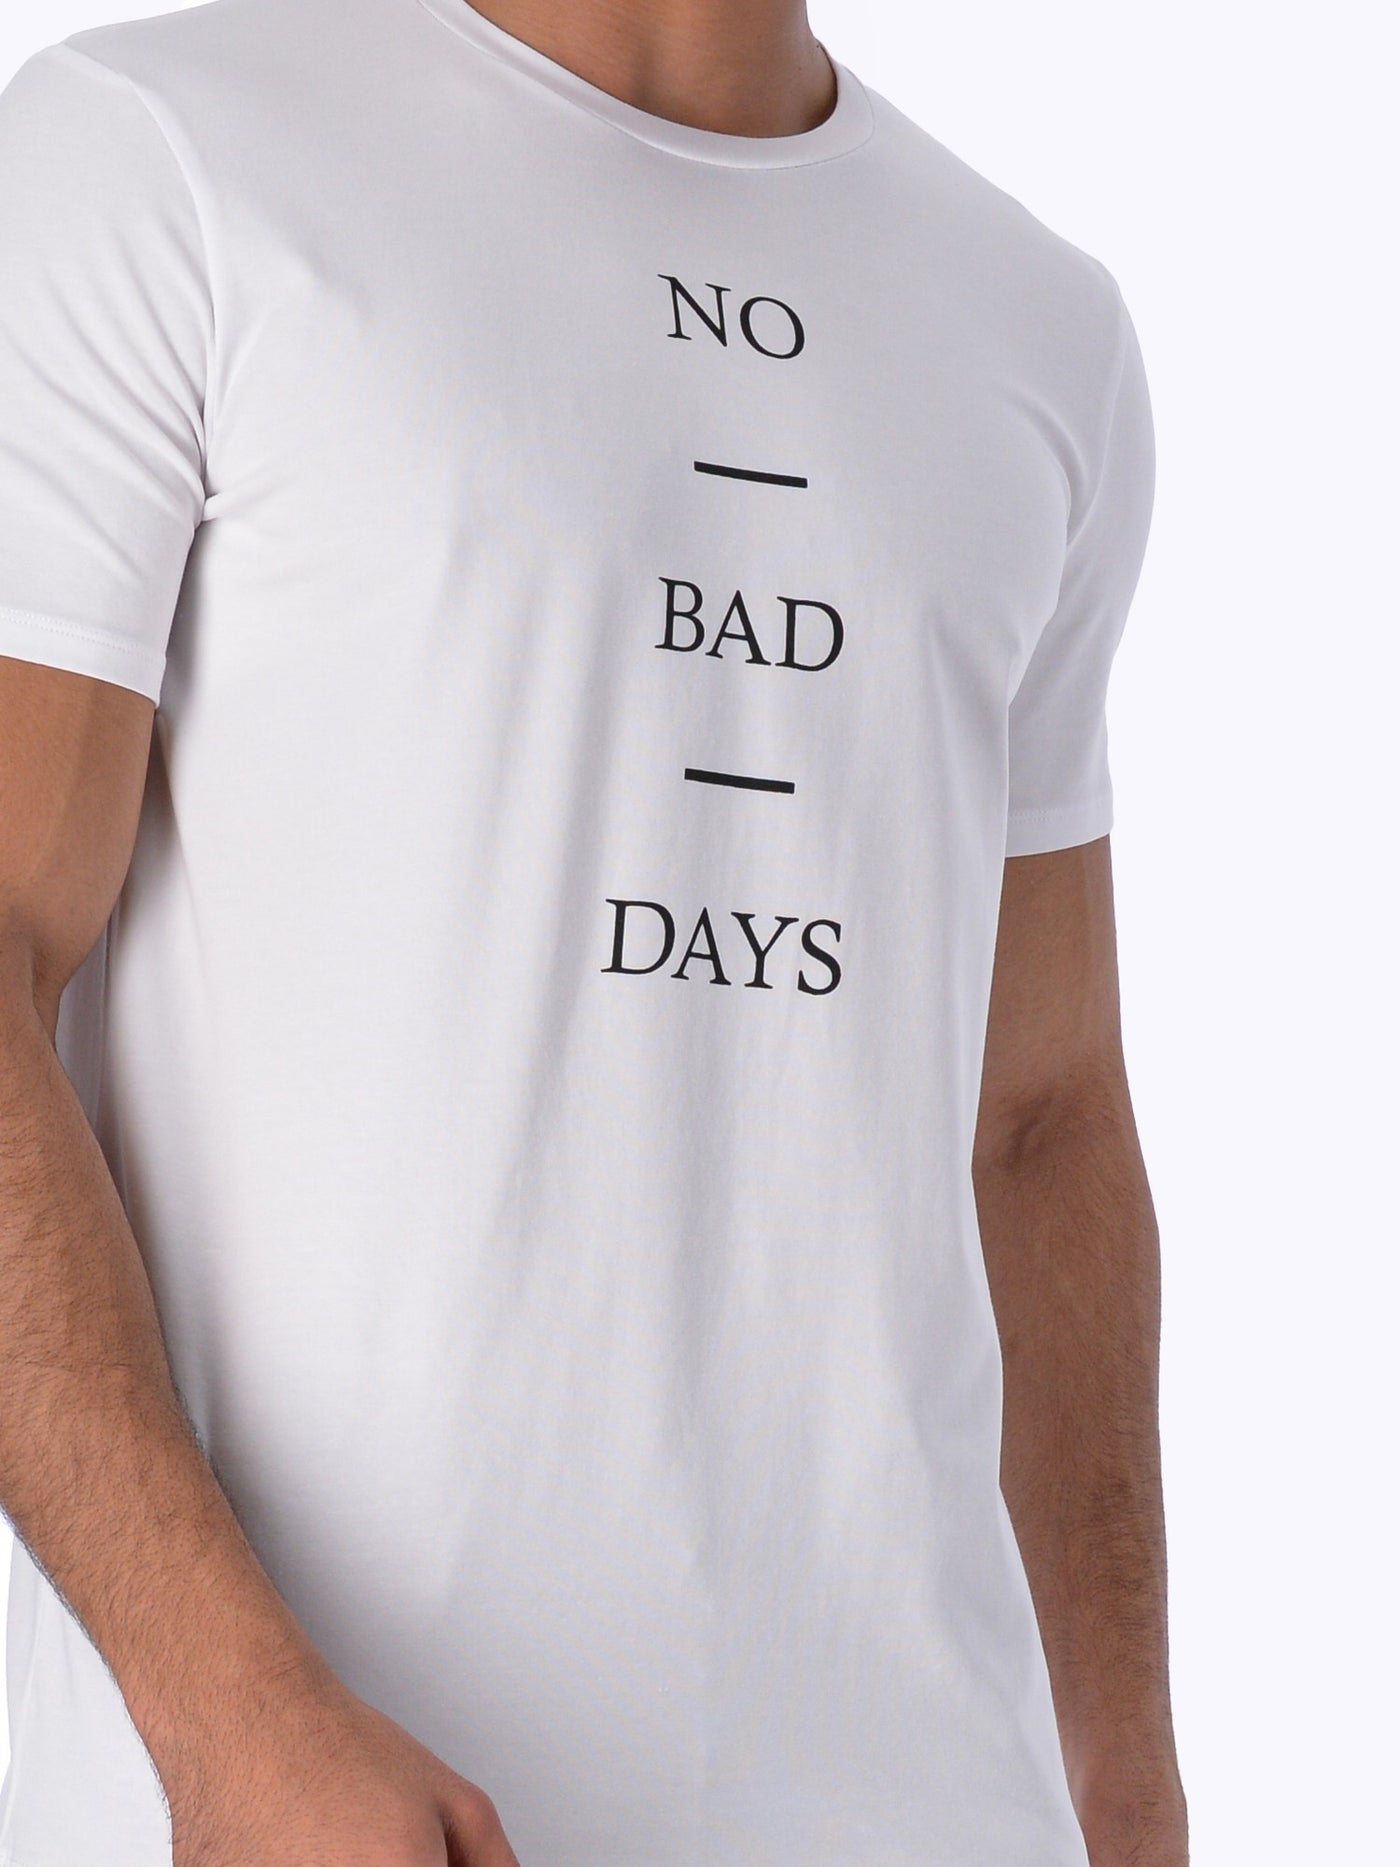 OR Men's Front Print T-Shirt